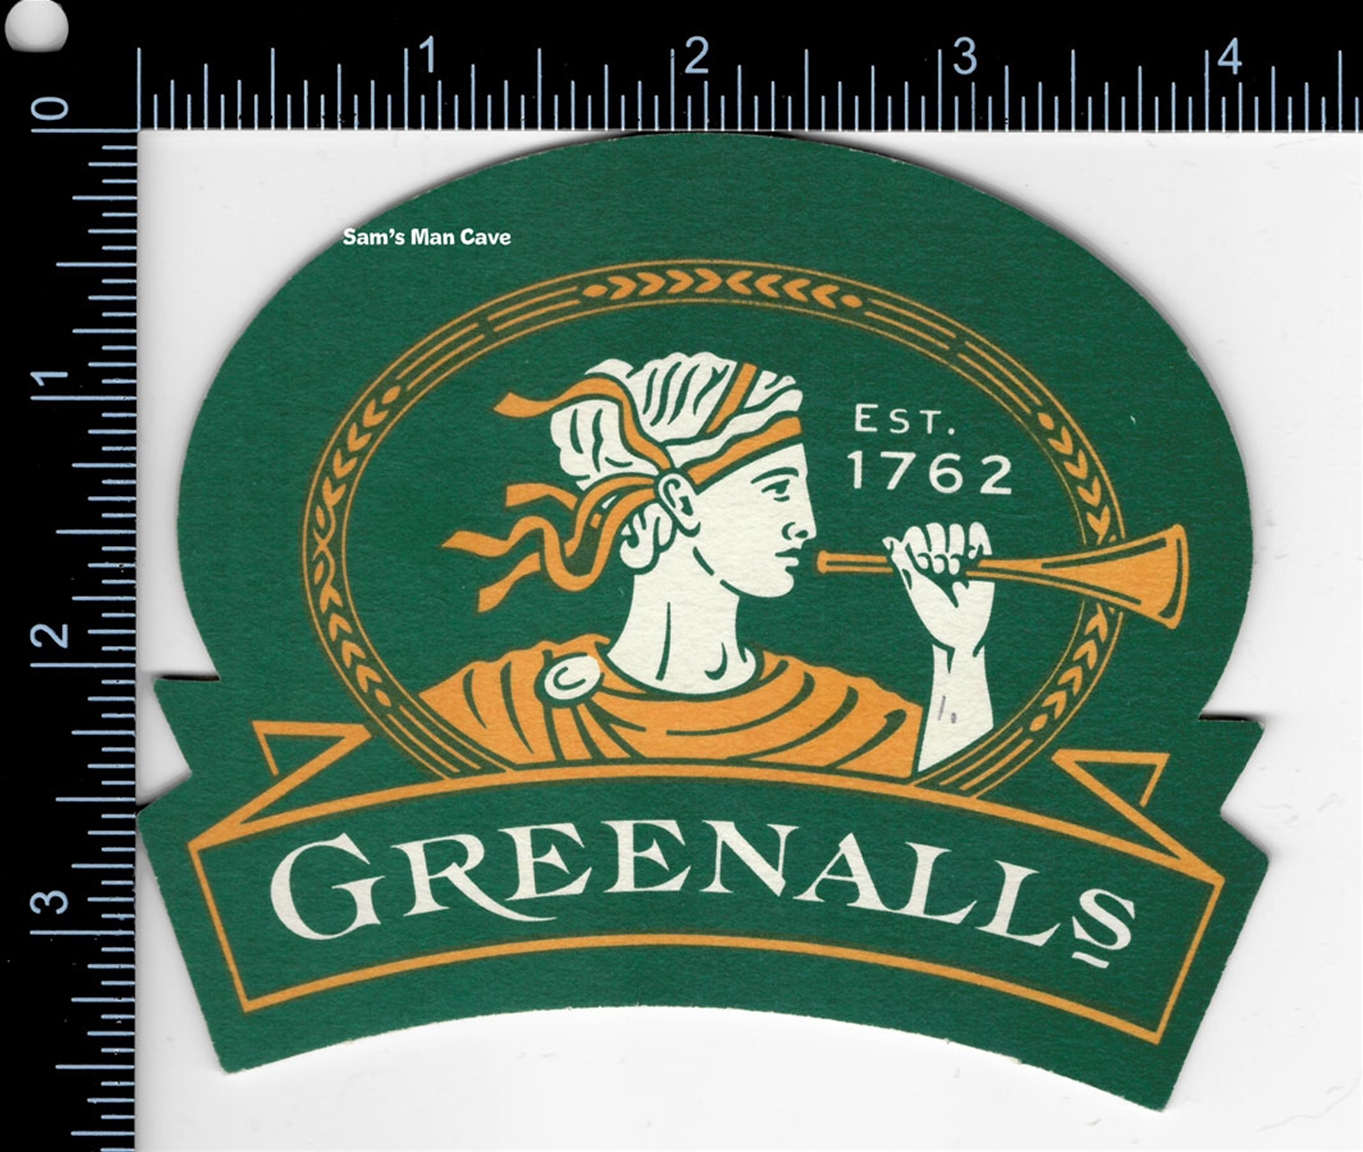 Greenalls Beer Coaster